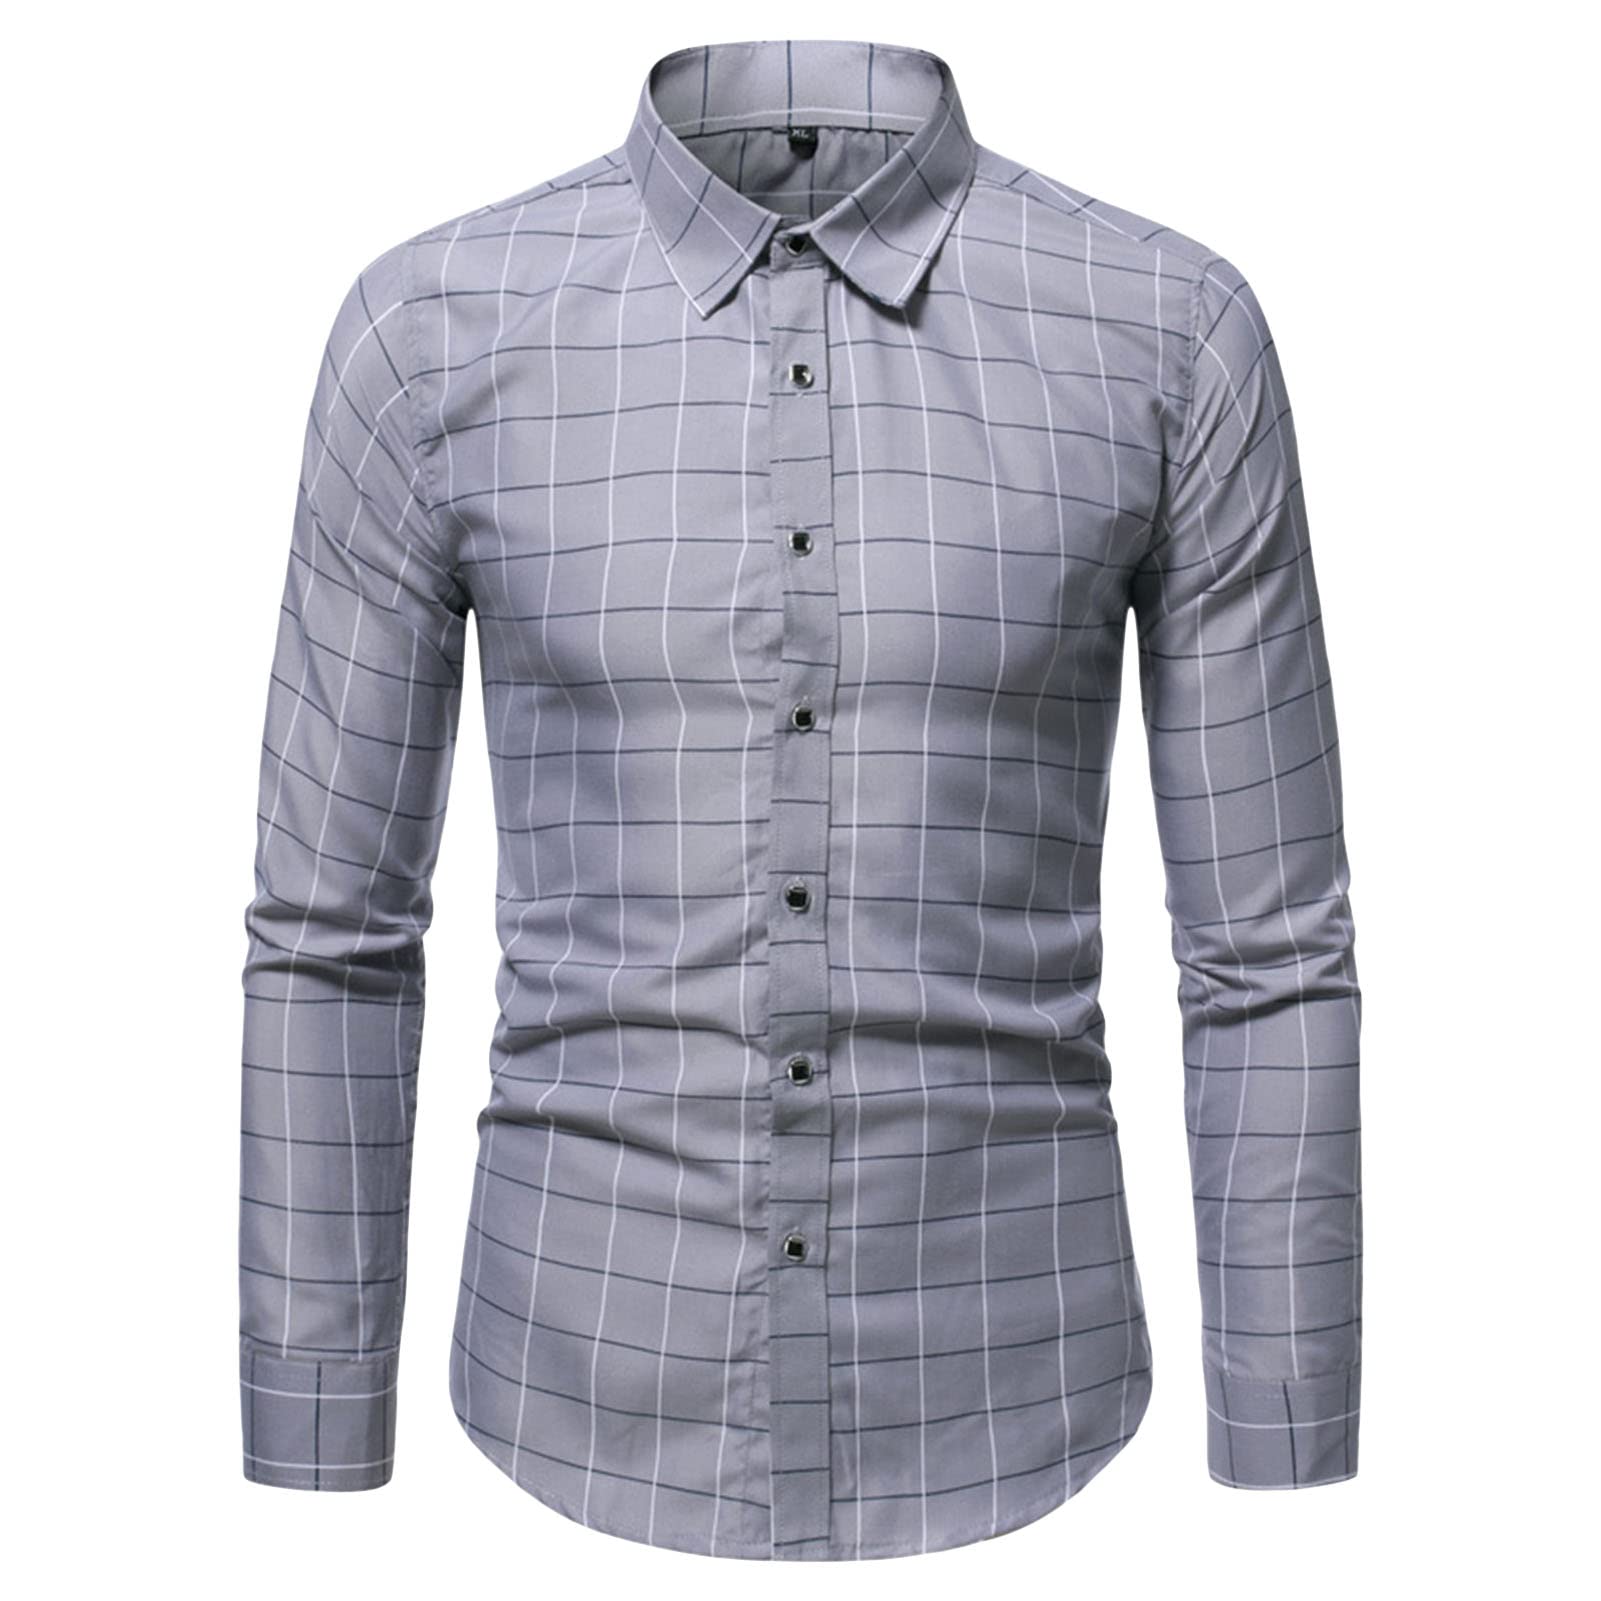 Men Striped Long Sleeve Button Down Shirts Plaid Turn-Down Collar Slim Shirts Classic Stylish Business Dress Shirt (Grey,4X-Large)